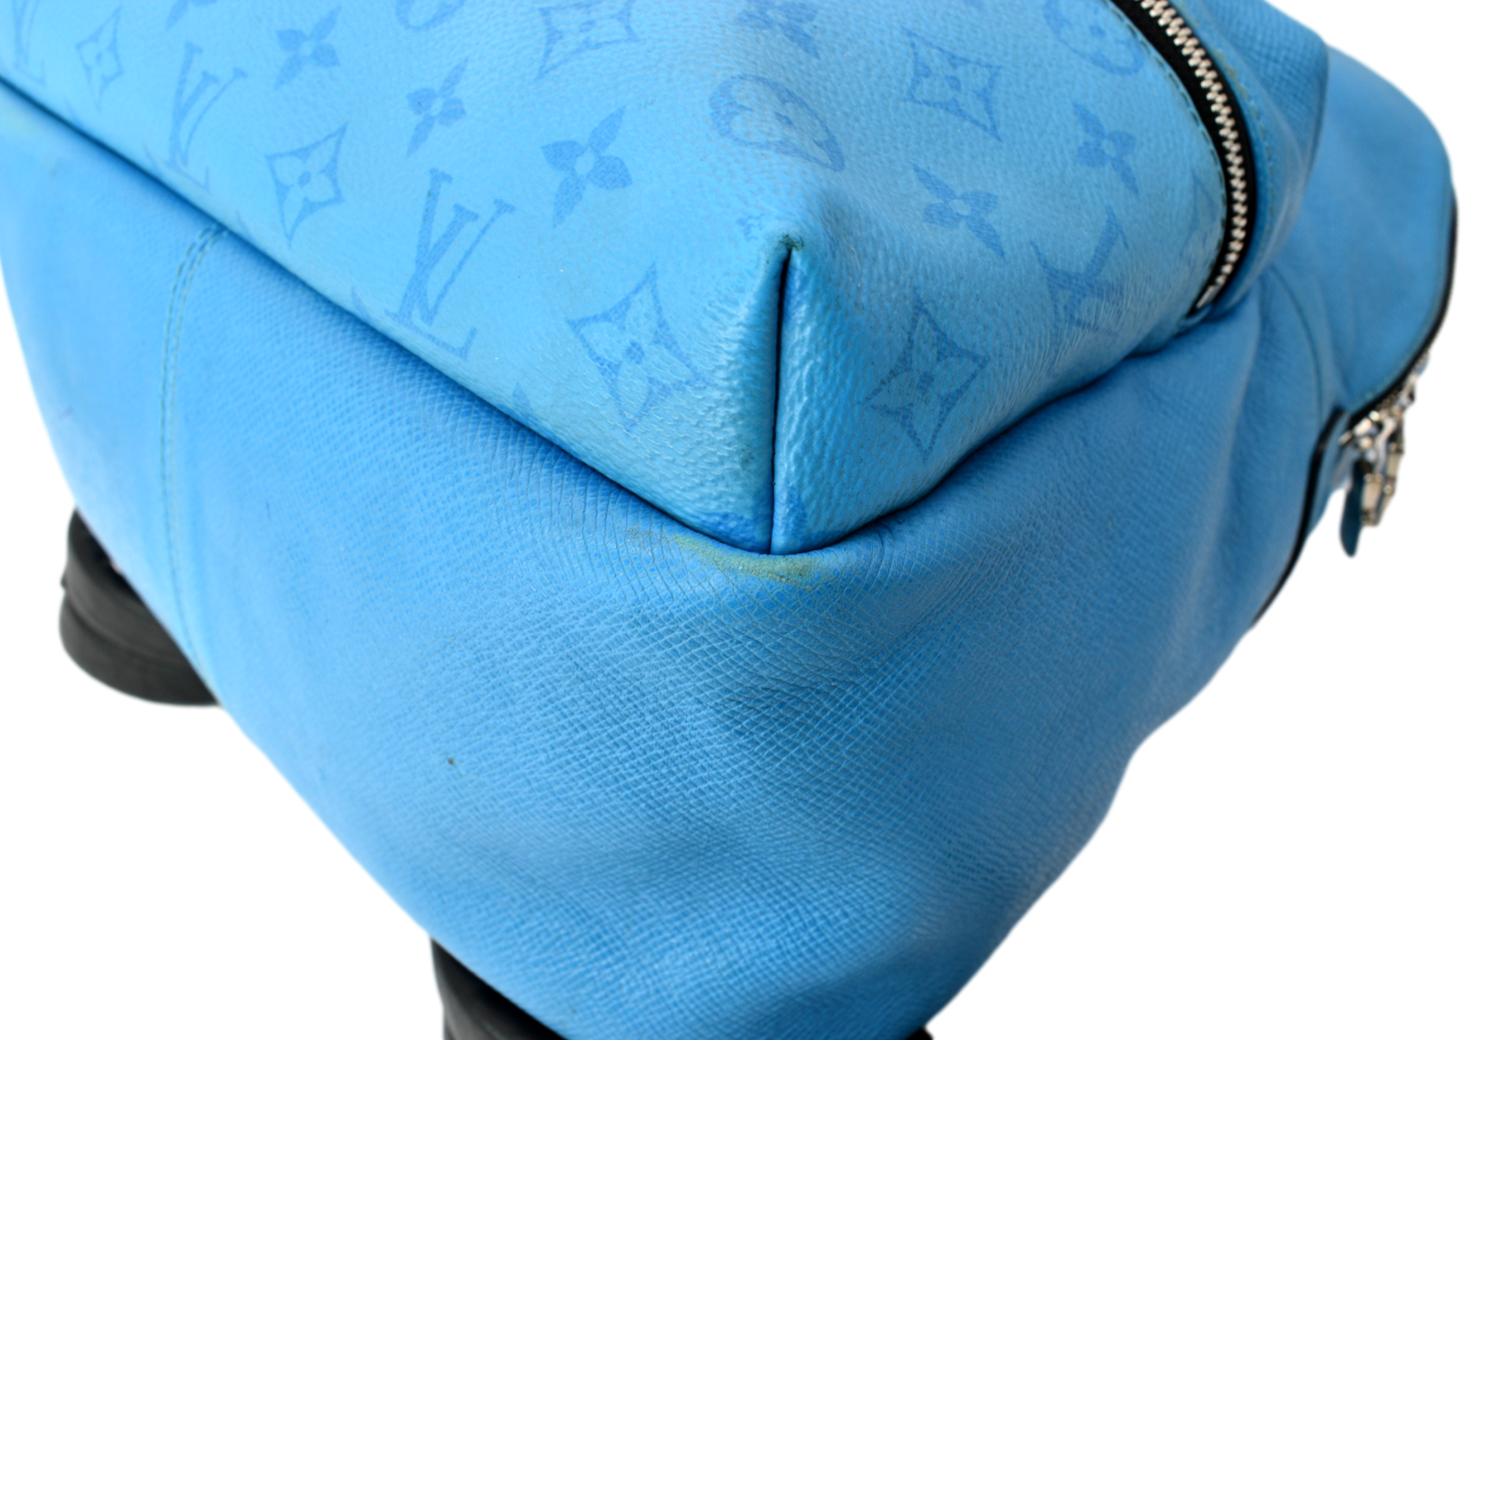 louis vuitton blue backpack